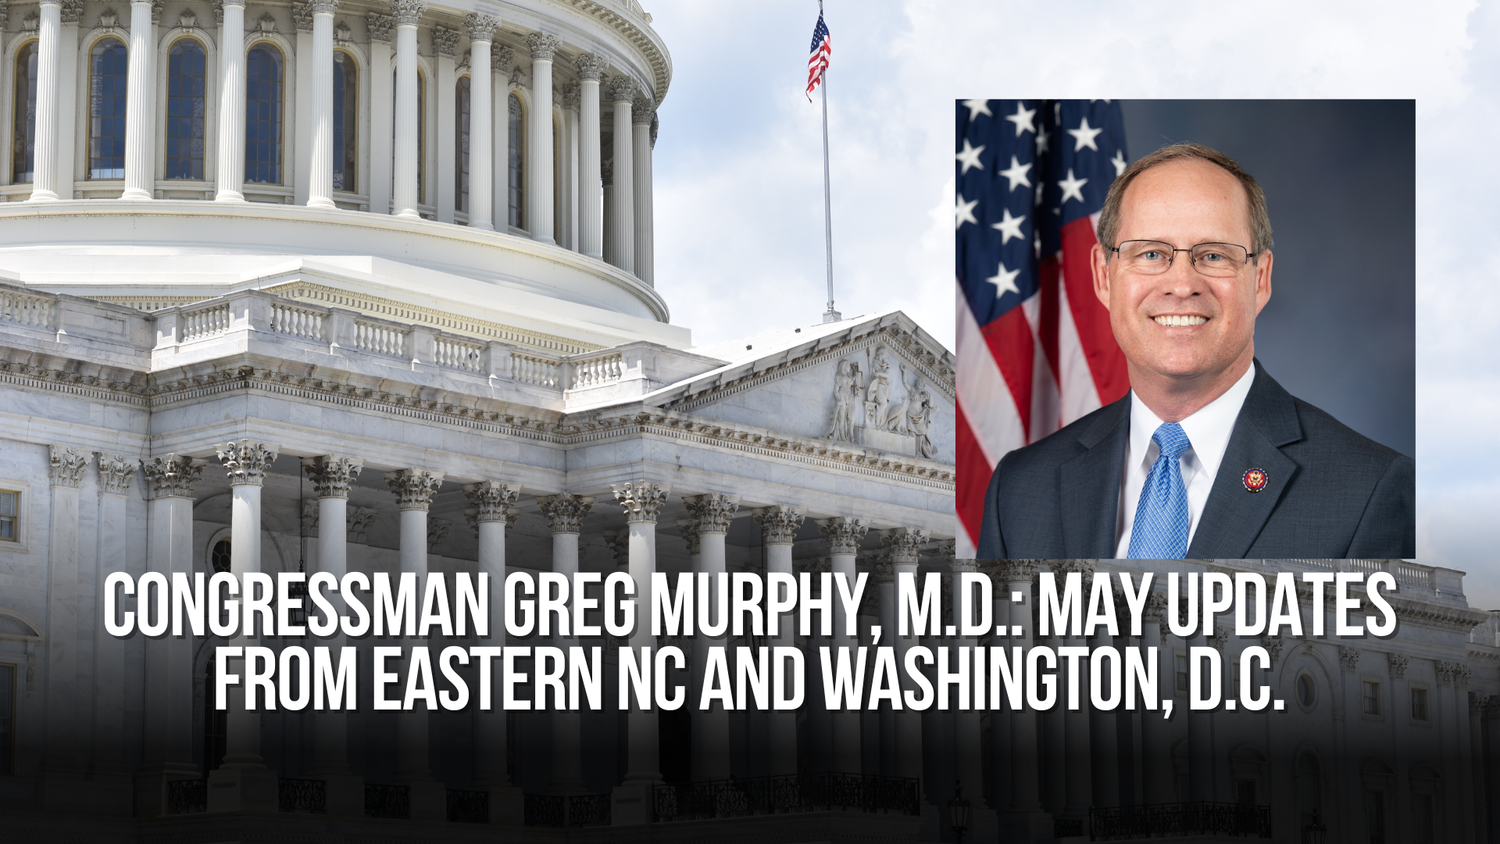 Congressman Greg Murphy, M.D.: May updates from Eastern North Carolina and Washington, D.C. — Neuse News